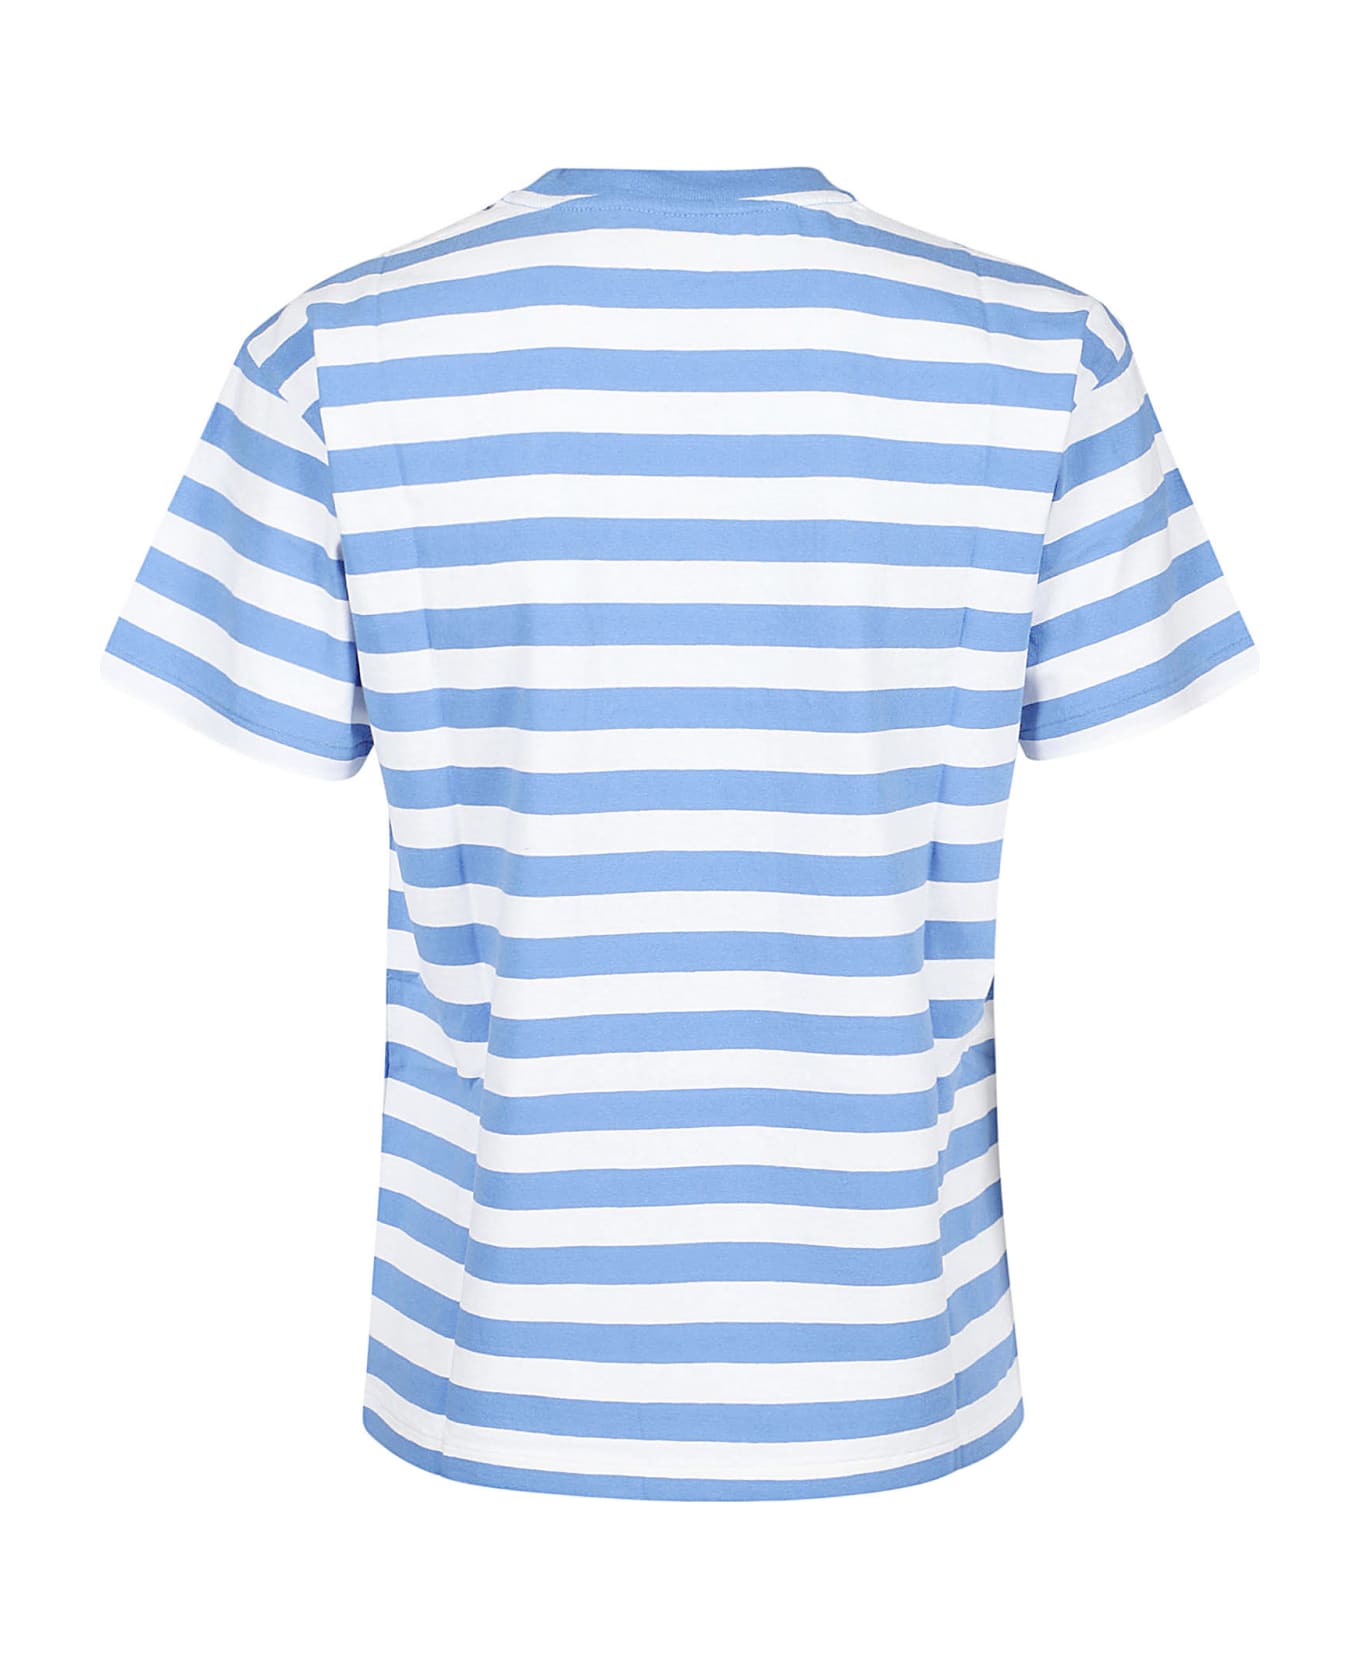 Polo Ralph Lauren Bear Print T-shirt - Resort Blue/white